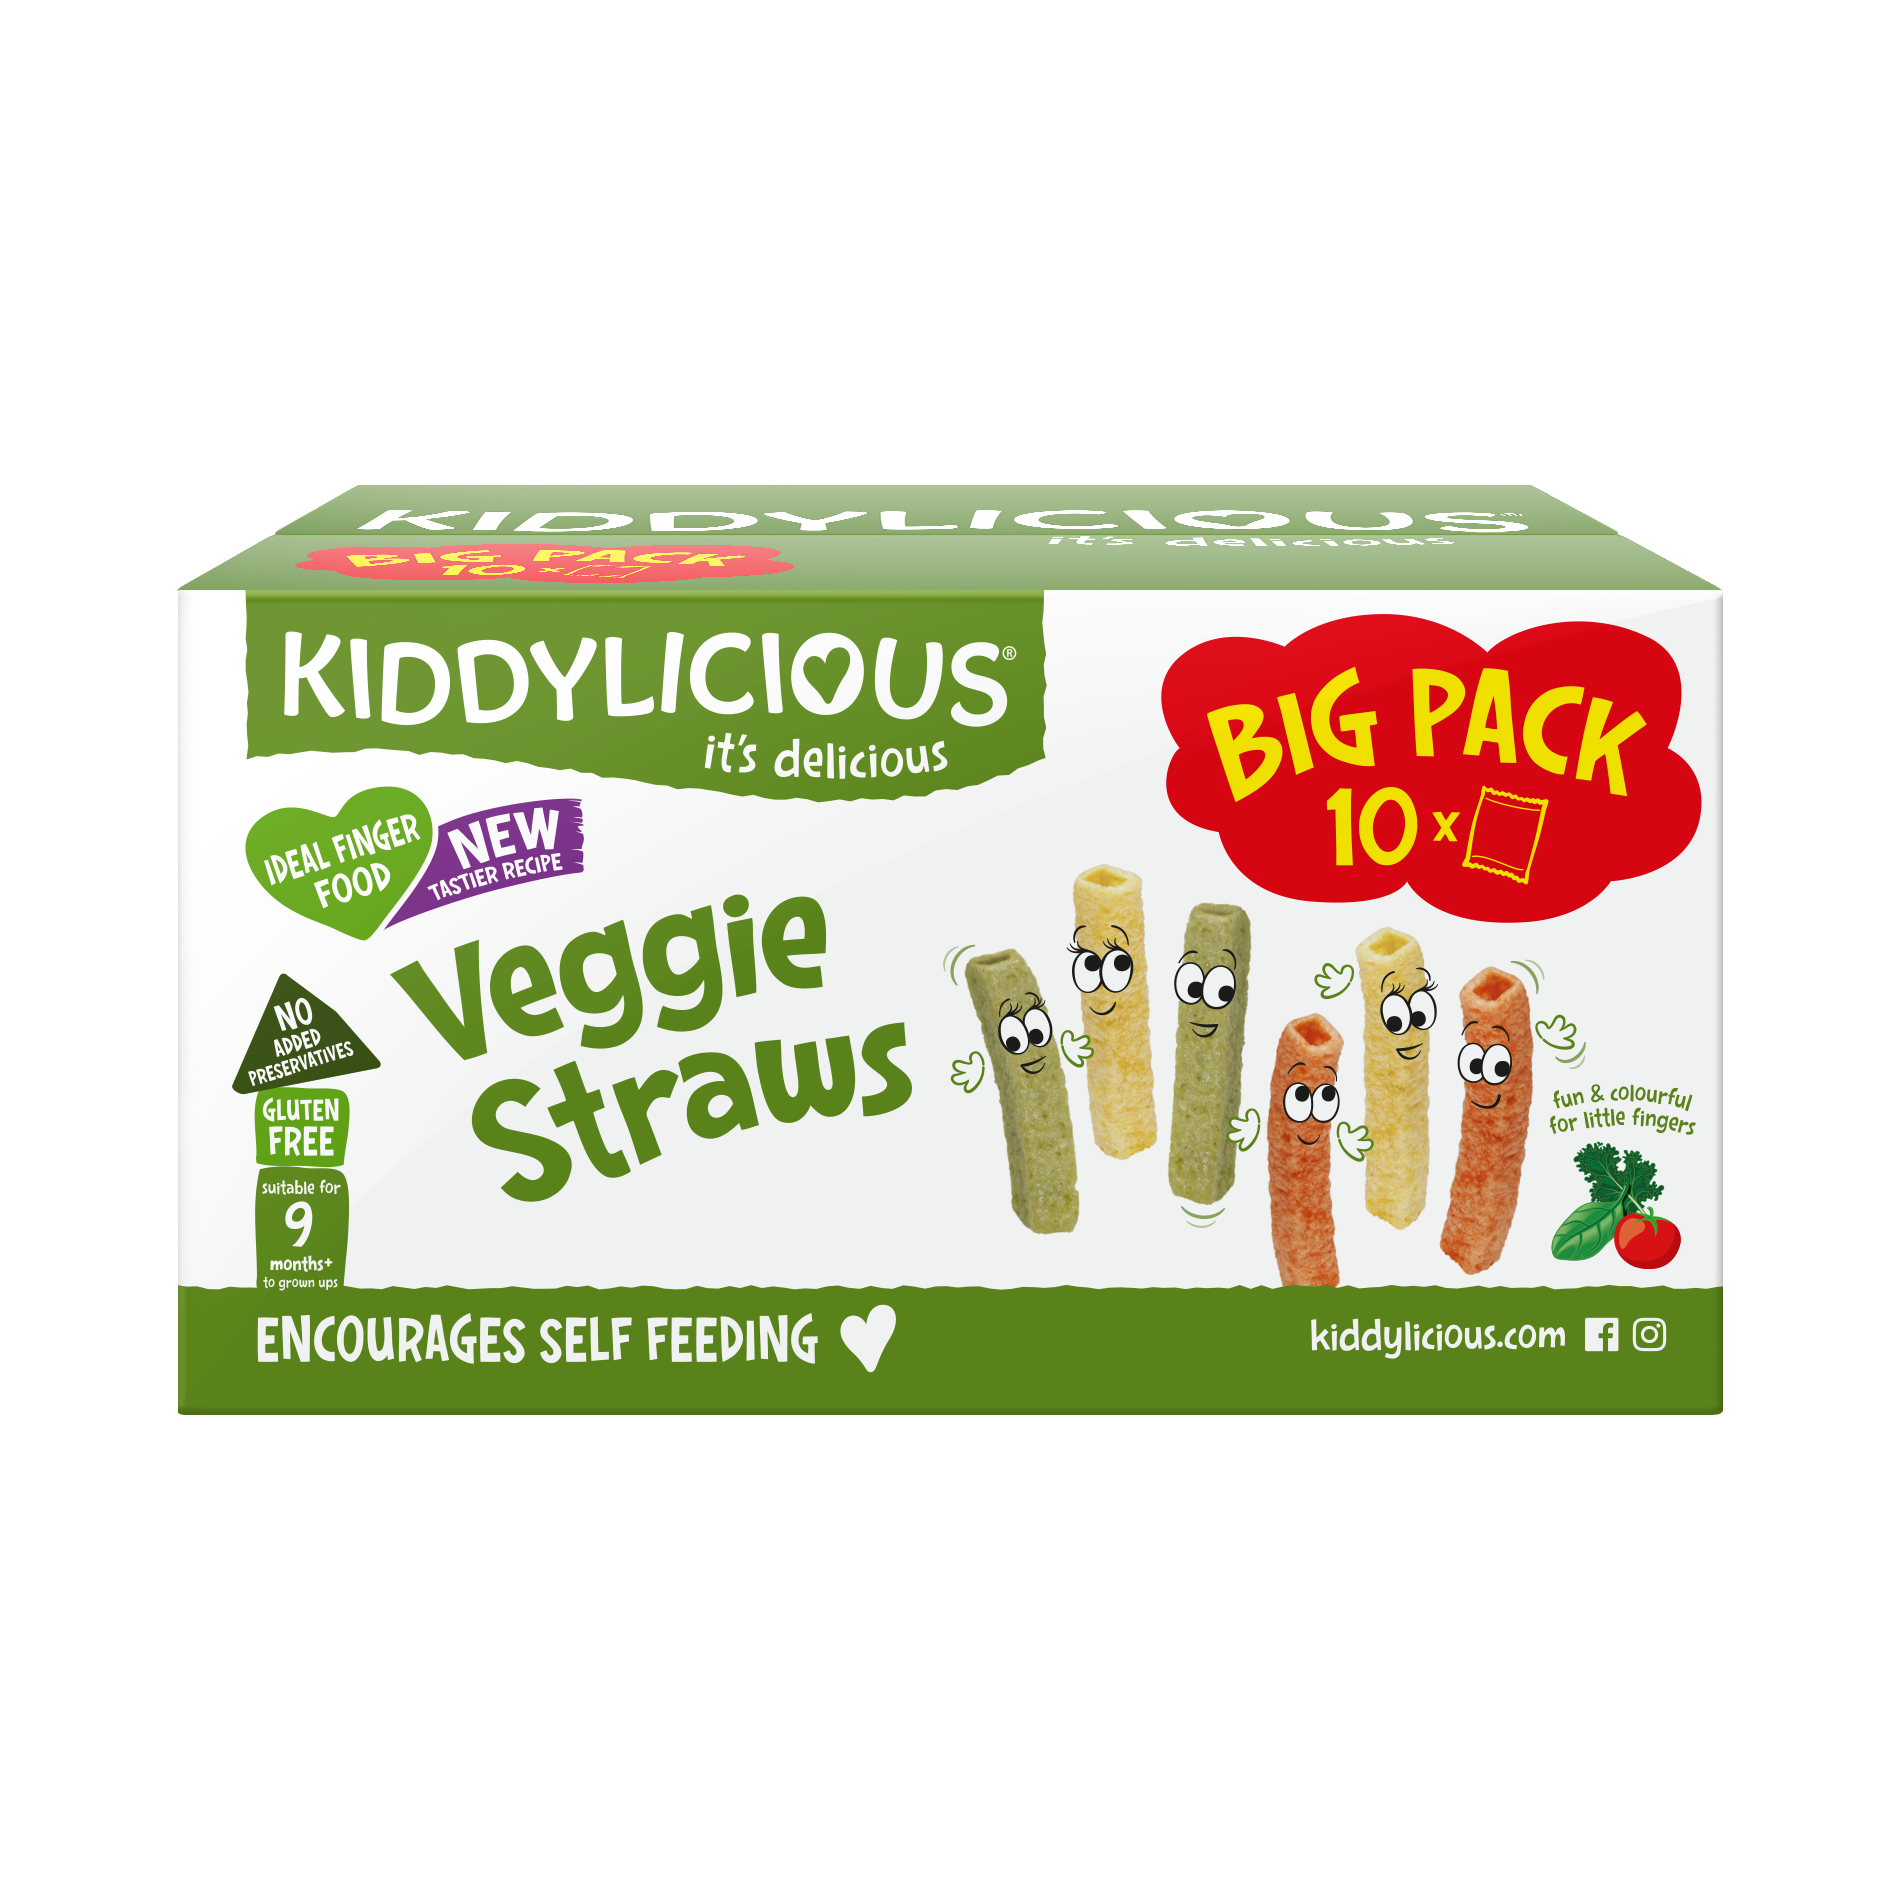 Buy Kiddylicious Veggies Straws 10 pack